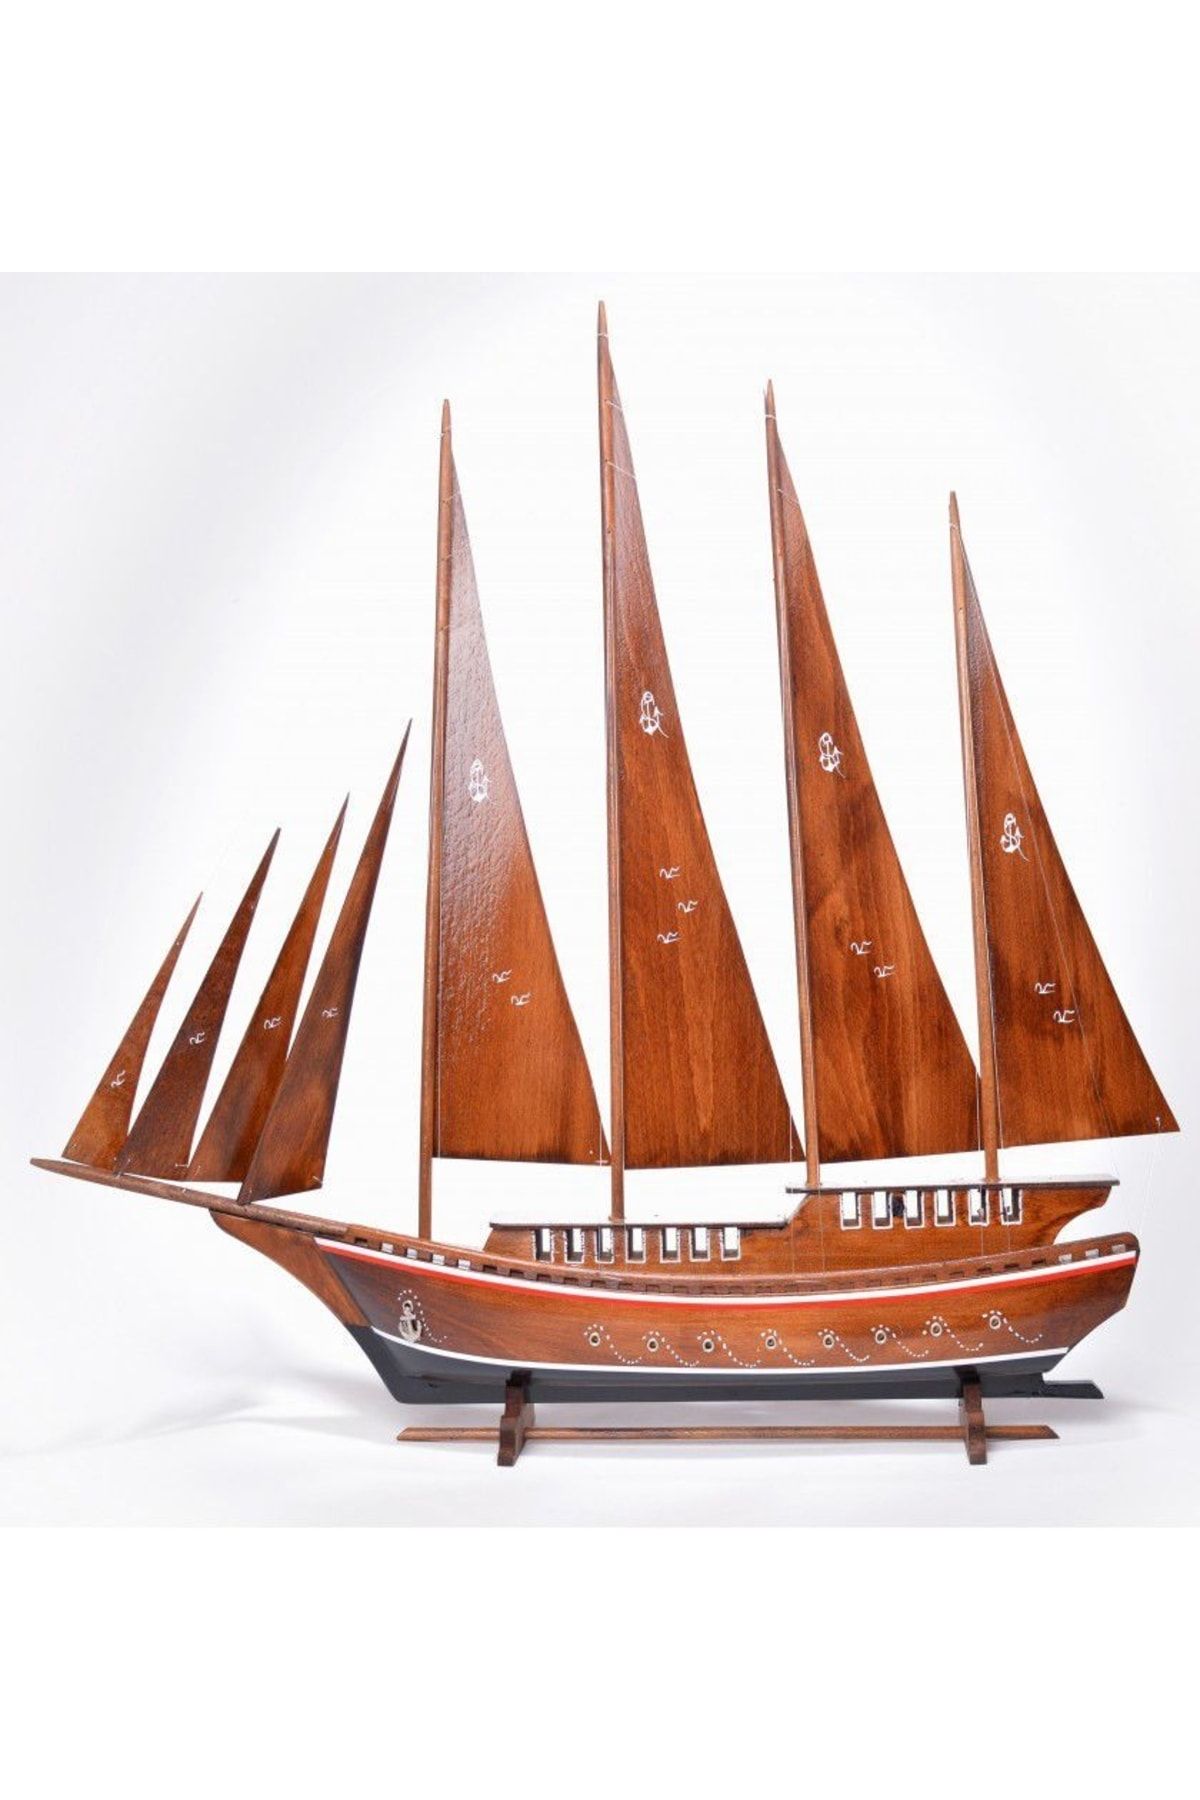 SYNOPE Ahşap Yelkenli Yat Modeli - Gemi Tekne Maketi (day-5)